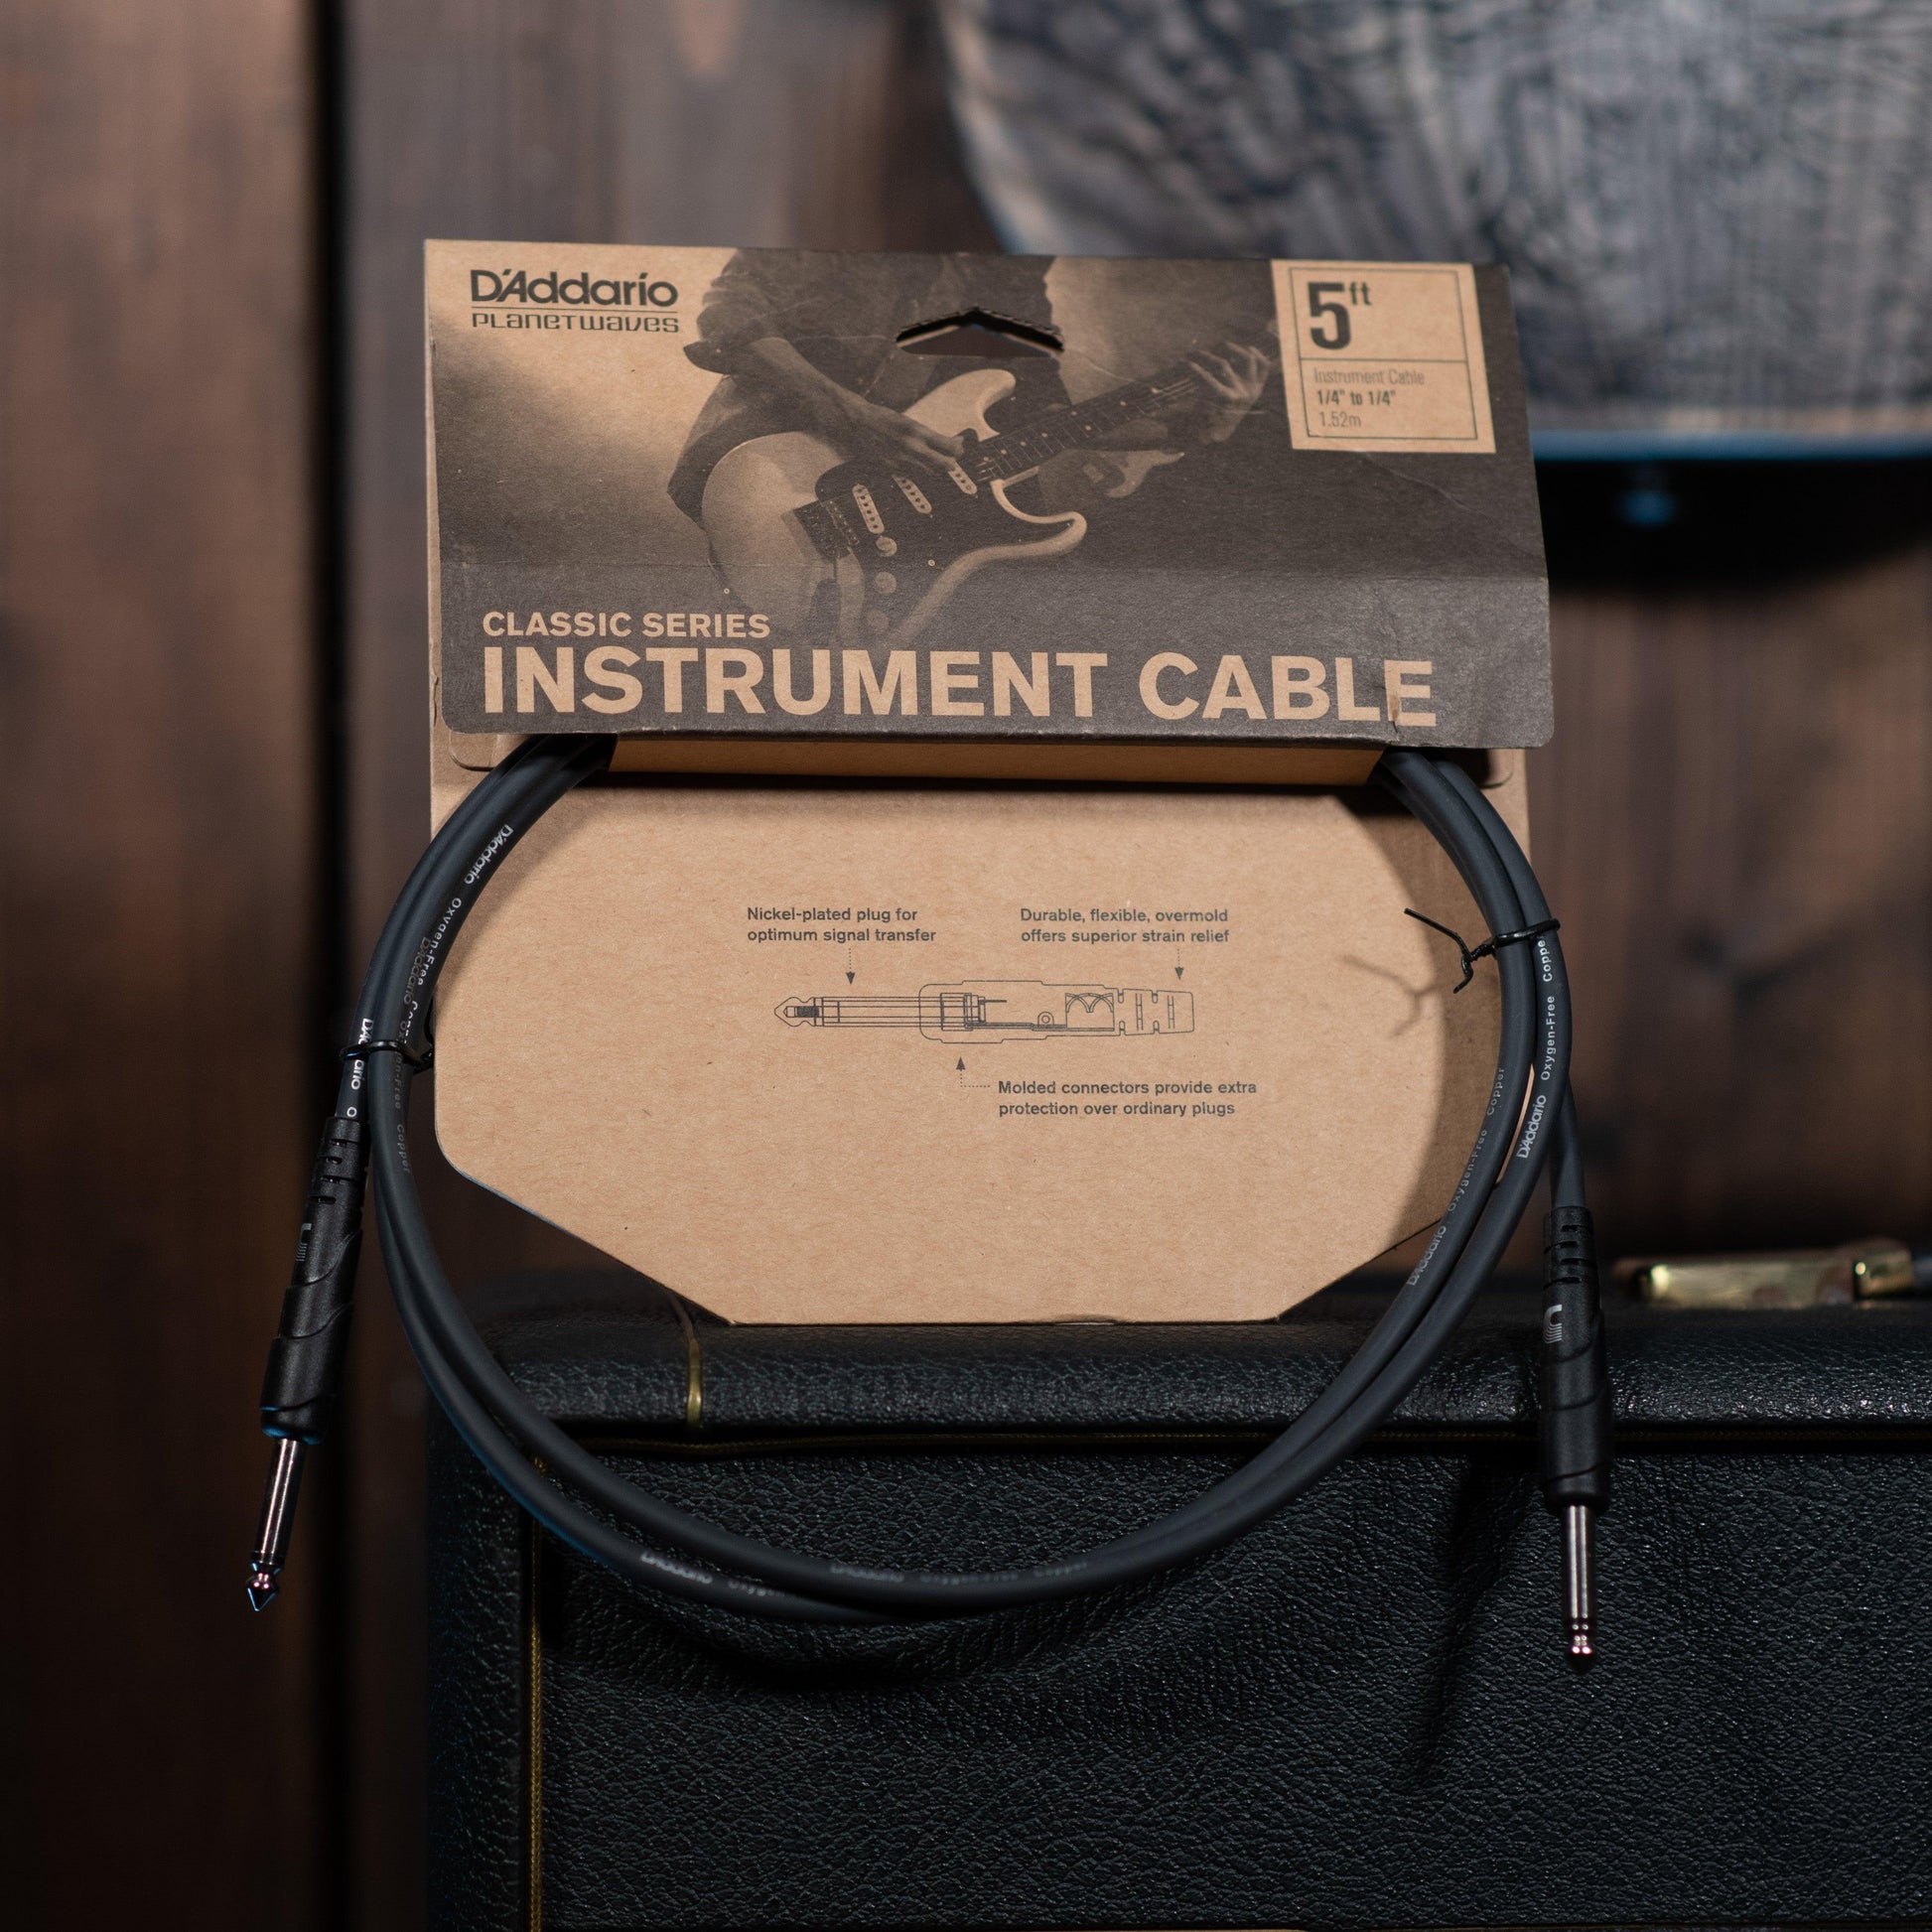 D'addario Classic Series Cable 5 ft. - Impulse Music Co.